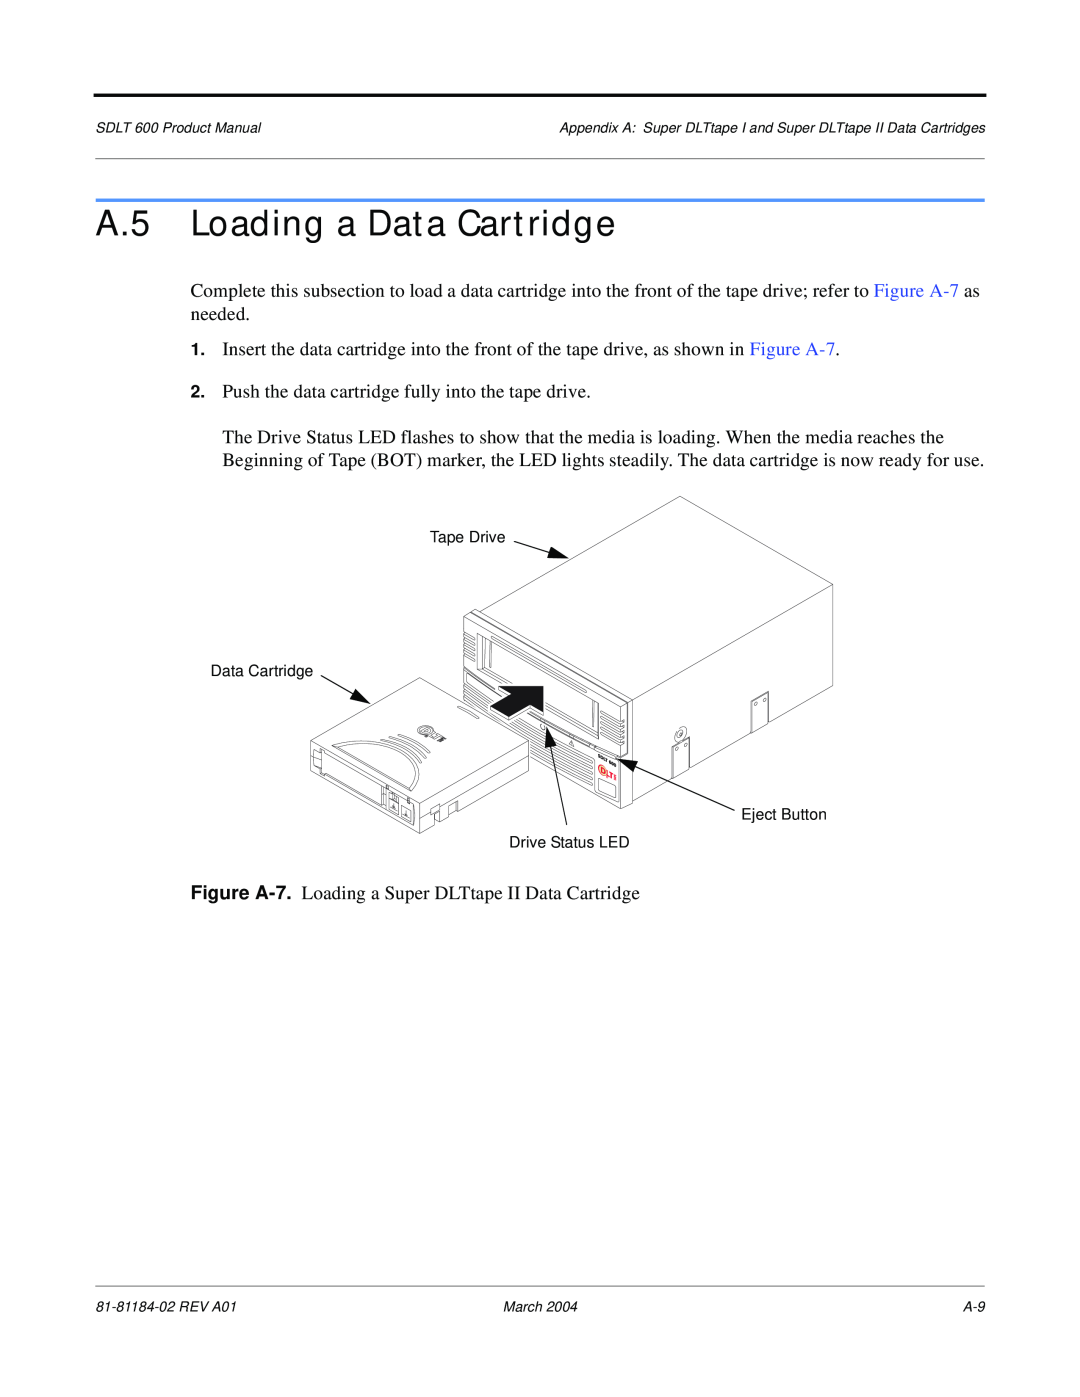 Tandberg Data 600 manual A.5 Loading a Data Cartridge 